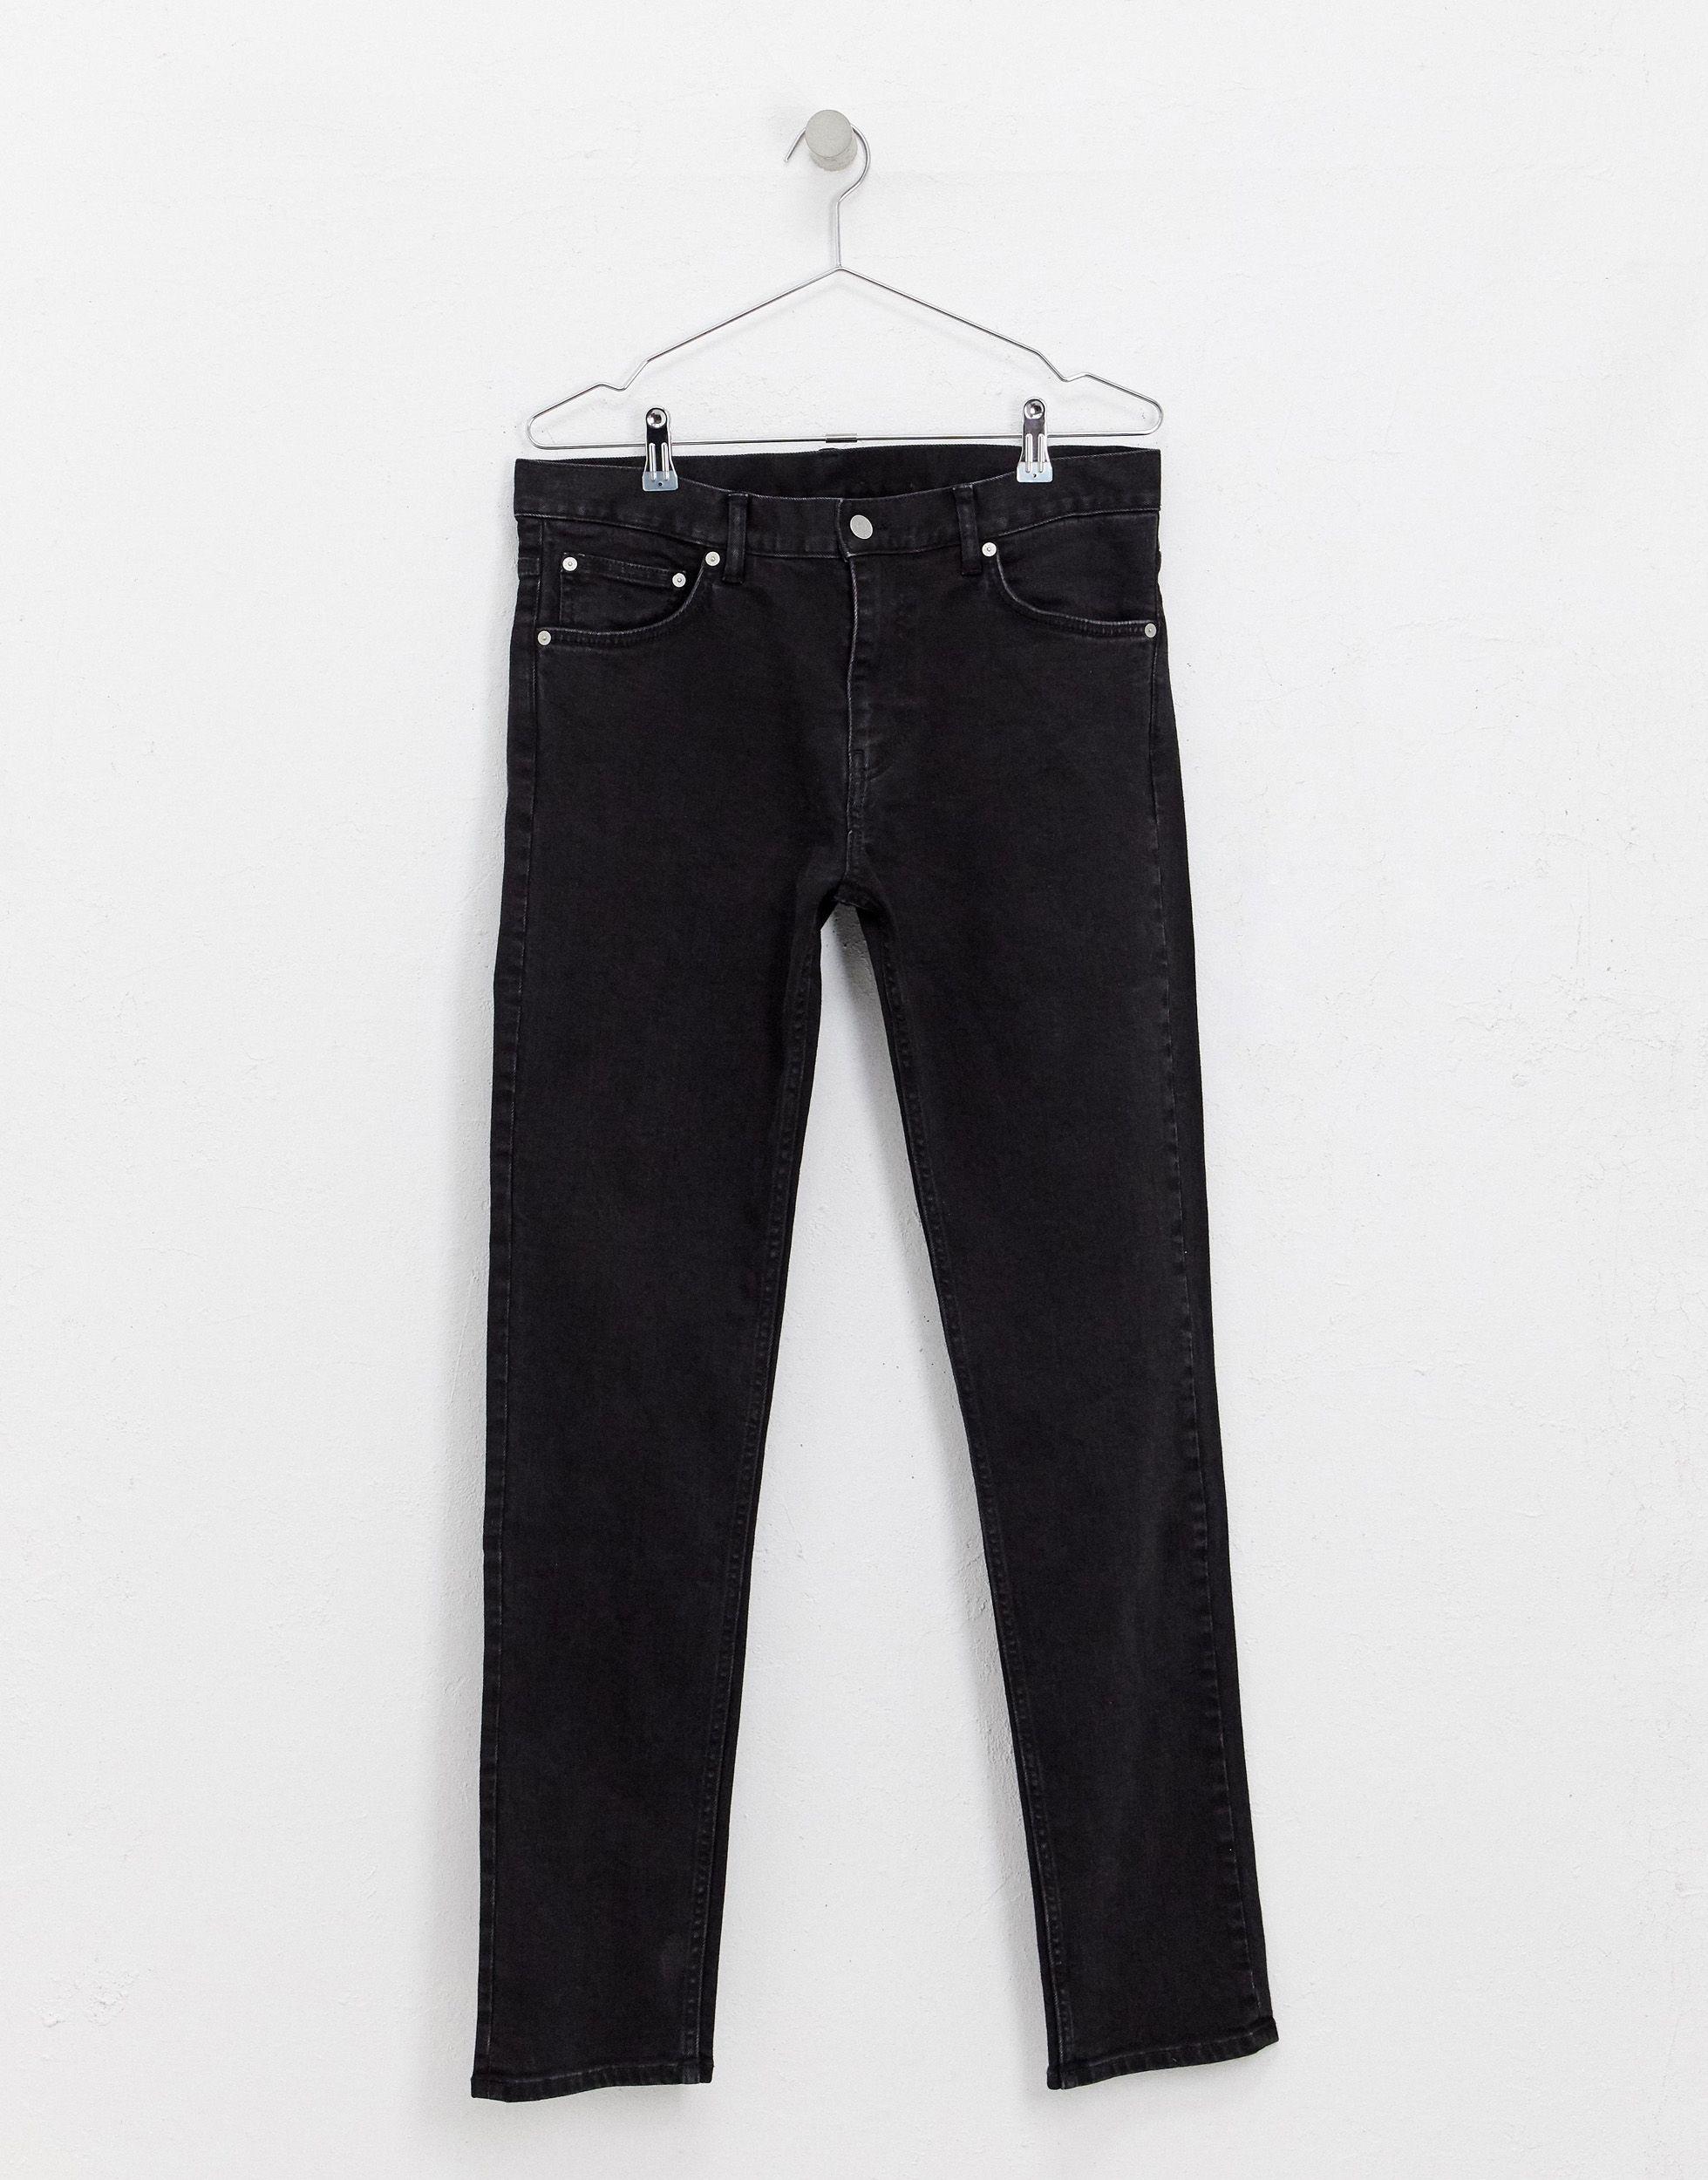 Weekday Denim Friday Slim Jeans Tuned in Black for Men - Lyst